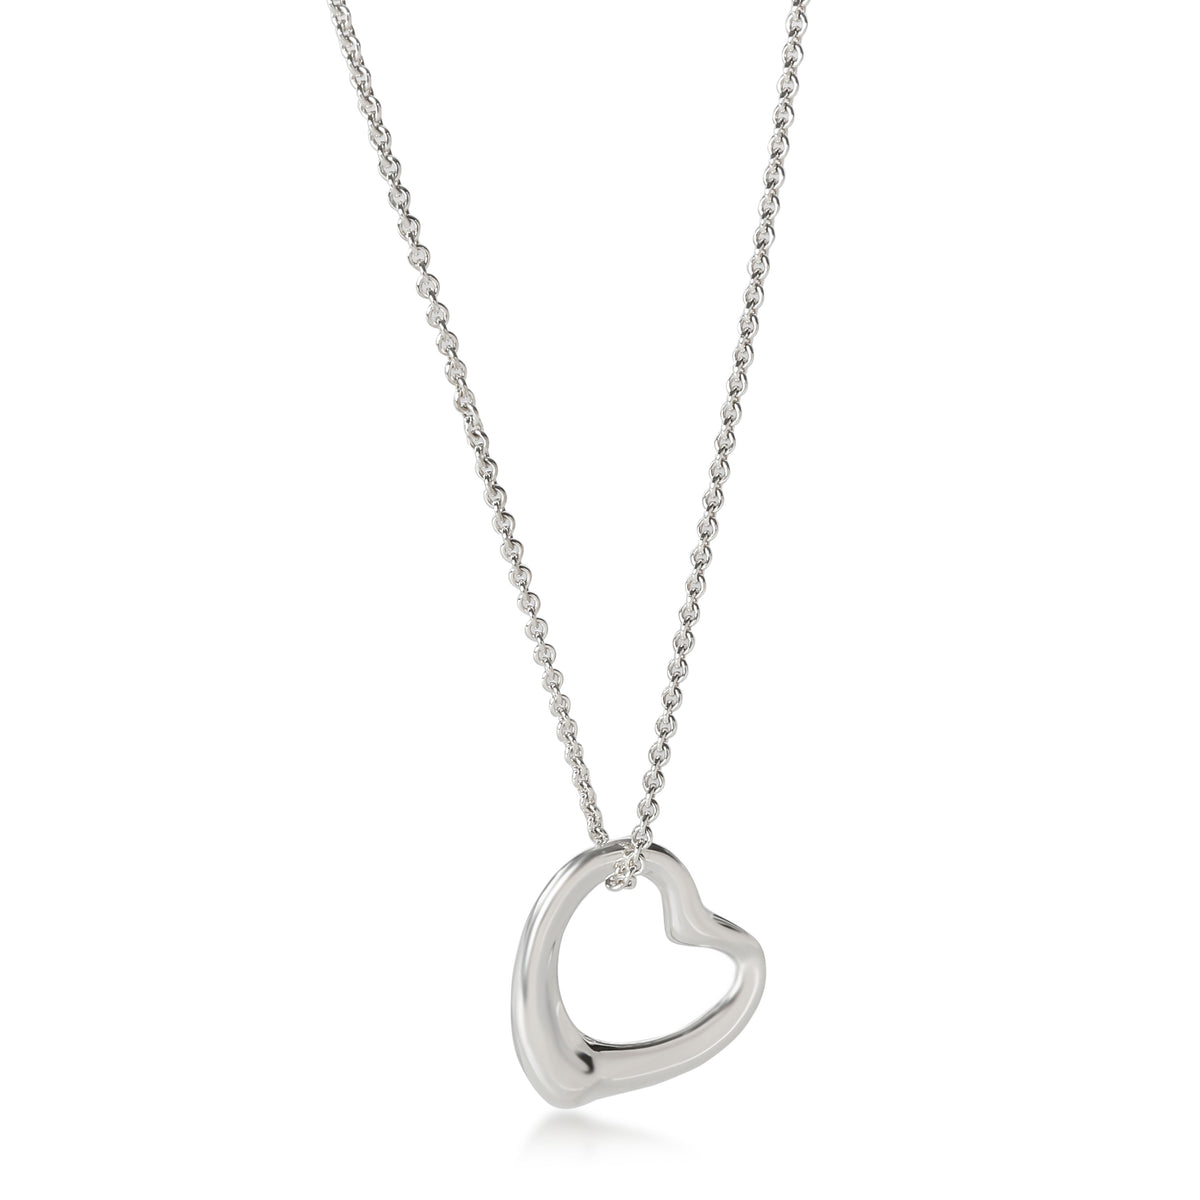 Tiffany & Co. Elsa Peretti Open Heart Necklace in Sterling Silver